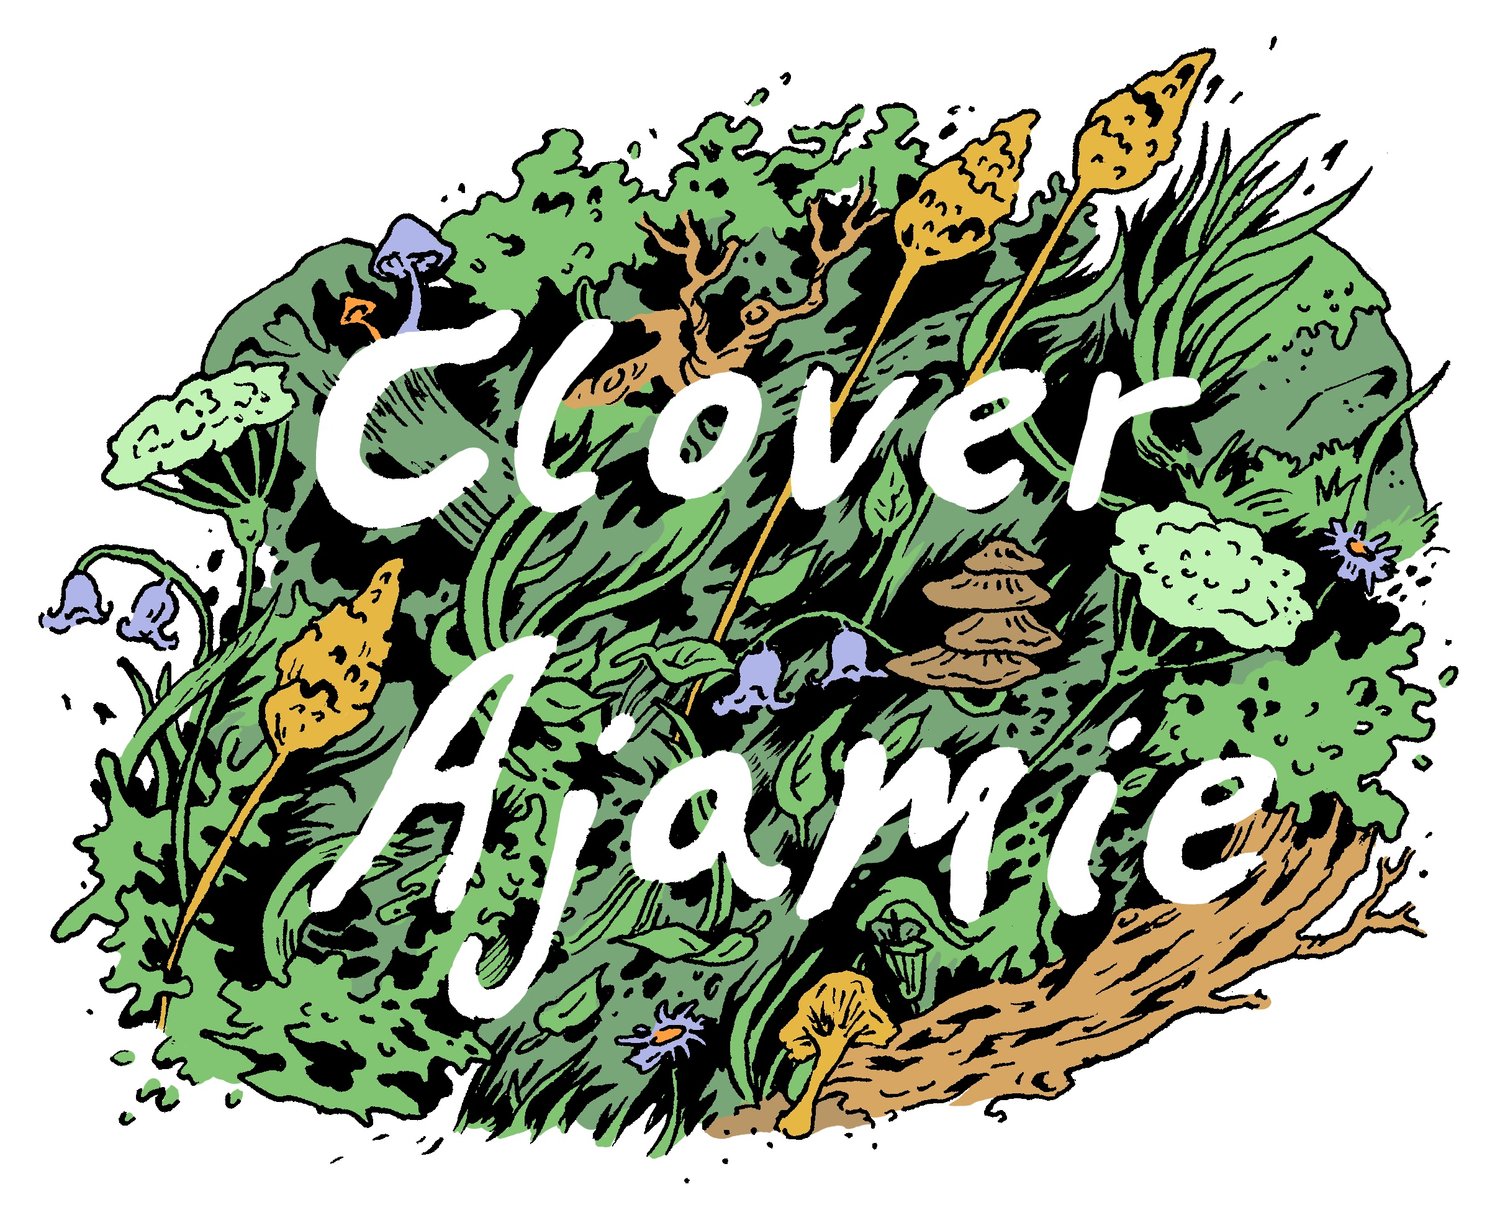  Clover Ajamie